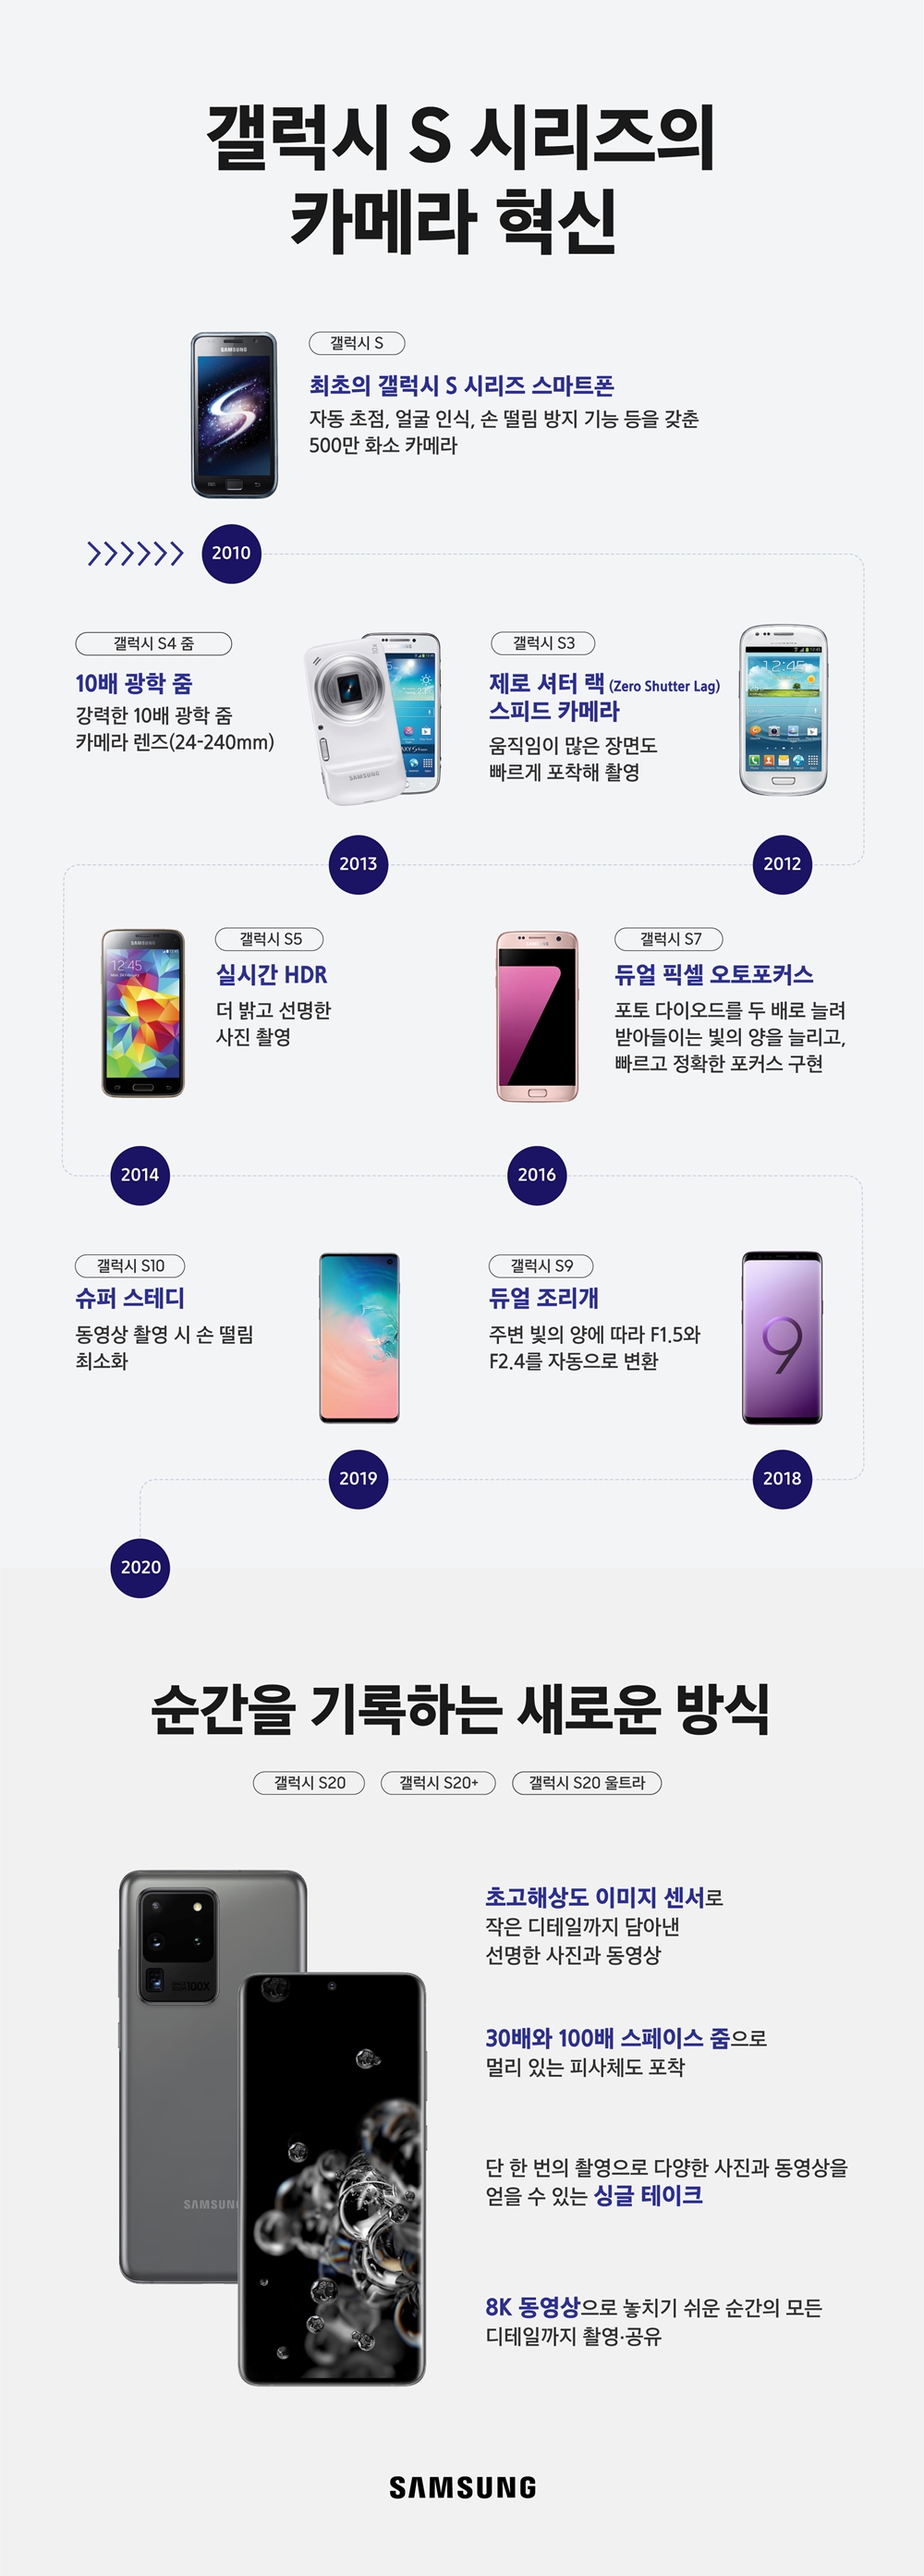 Infographic-How-Samsung’s-Galaxy-S-Series-Revolutionized-the-Camera_2020.03.11.-222.jpg